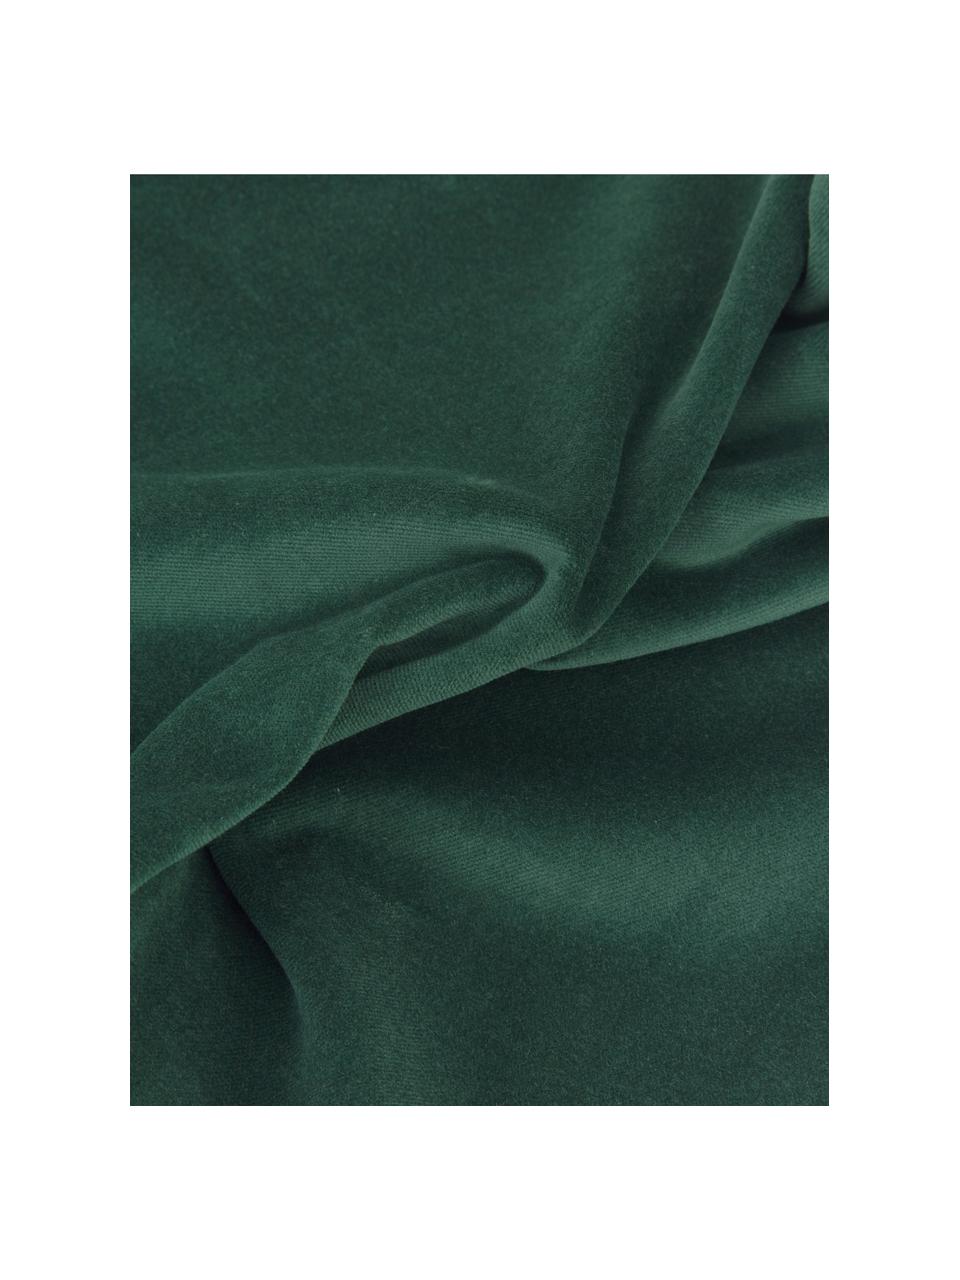 Effen fluwelen kussenhoes Dana in smaragdgroen, 100% katoenfluweel, Smaragdgroen, B 30 x L 50 cm